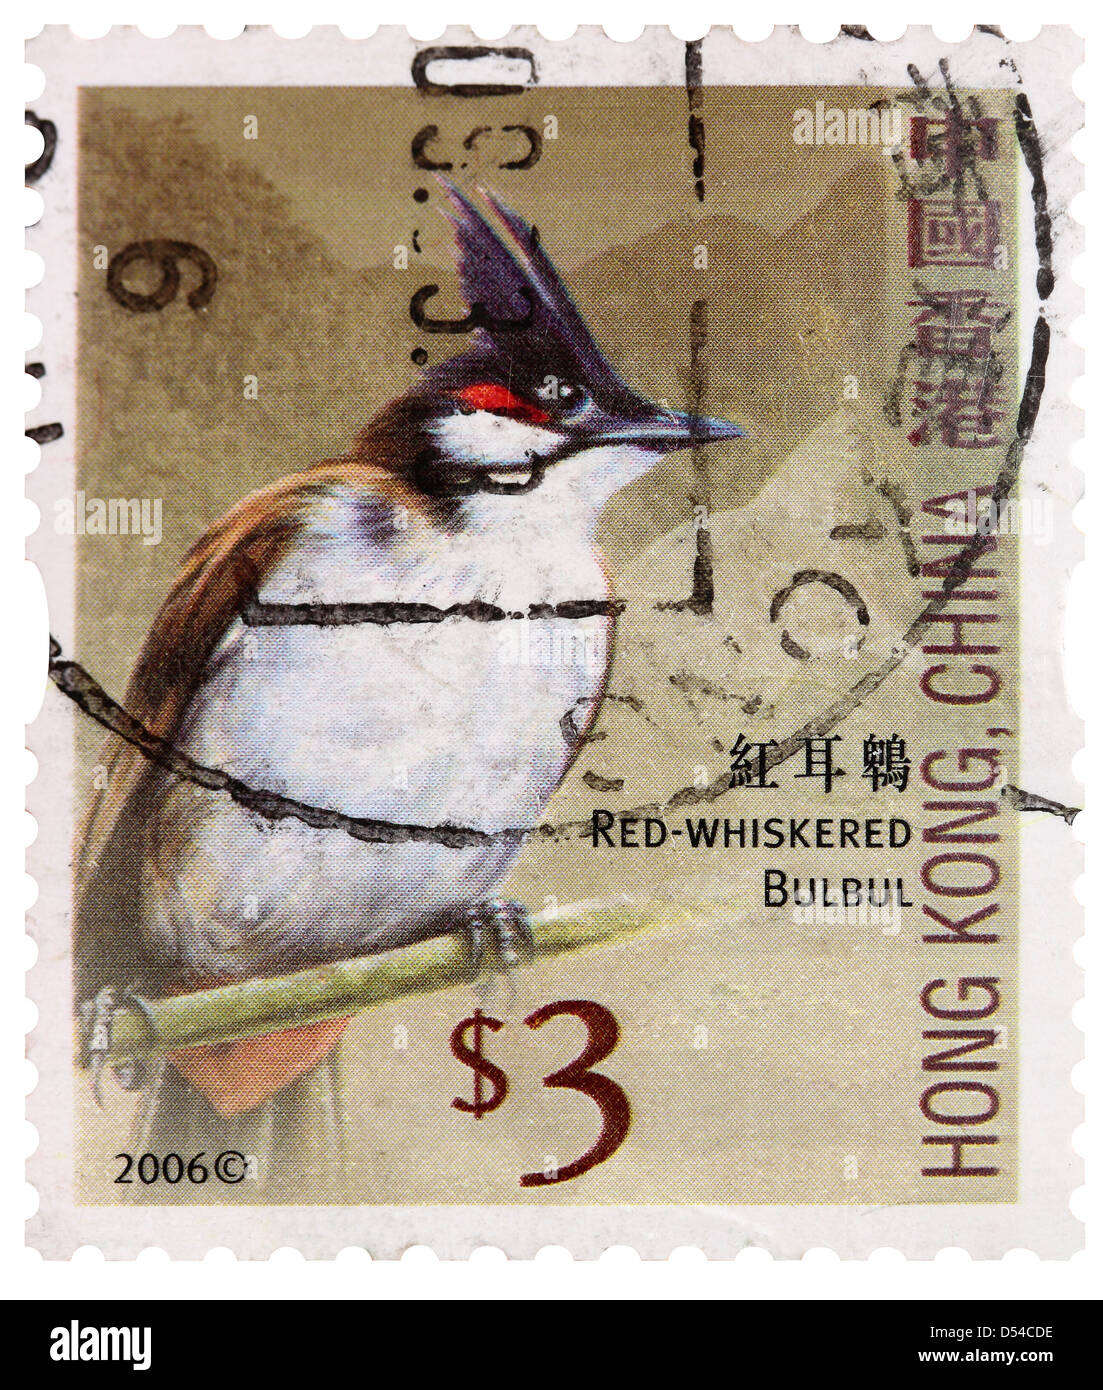 Usato tre Dollaro di Hong Kong Francobollo - Bulbul Red-Whiskered Foto Stock